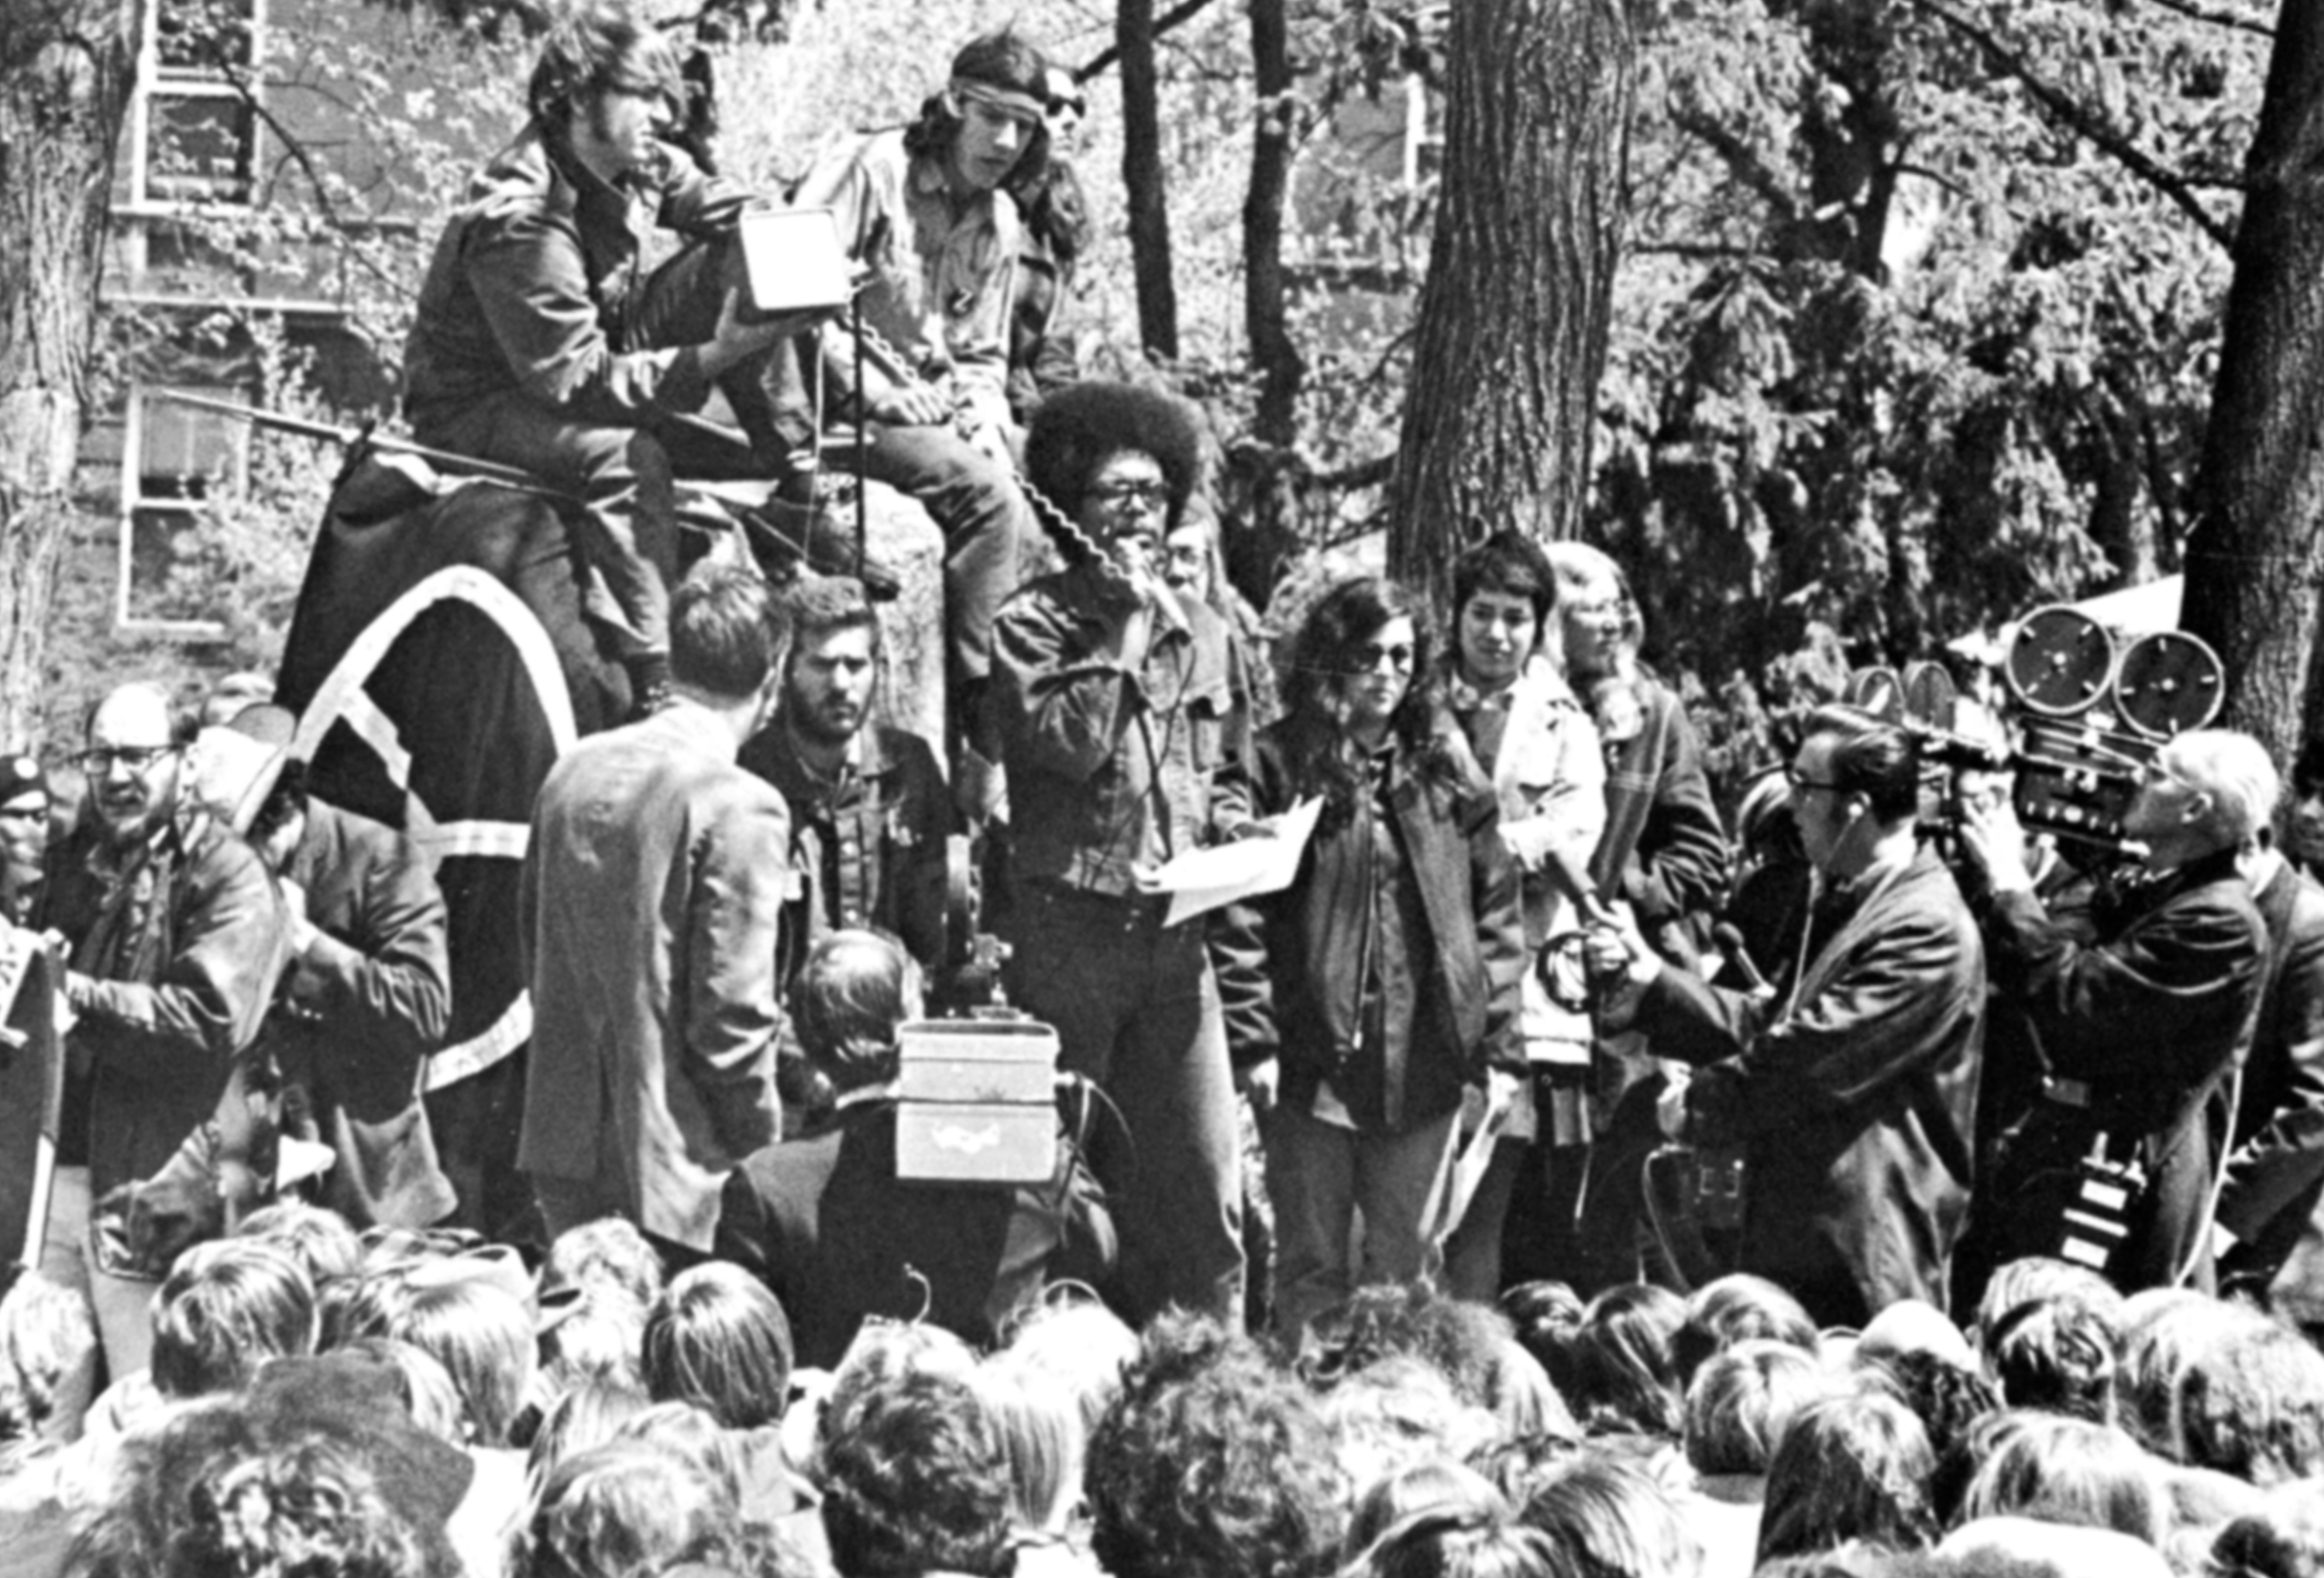 Protest at the Rock, circa 1970